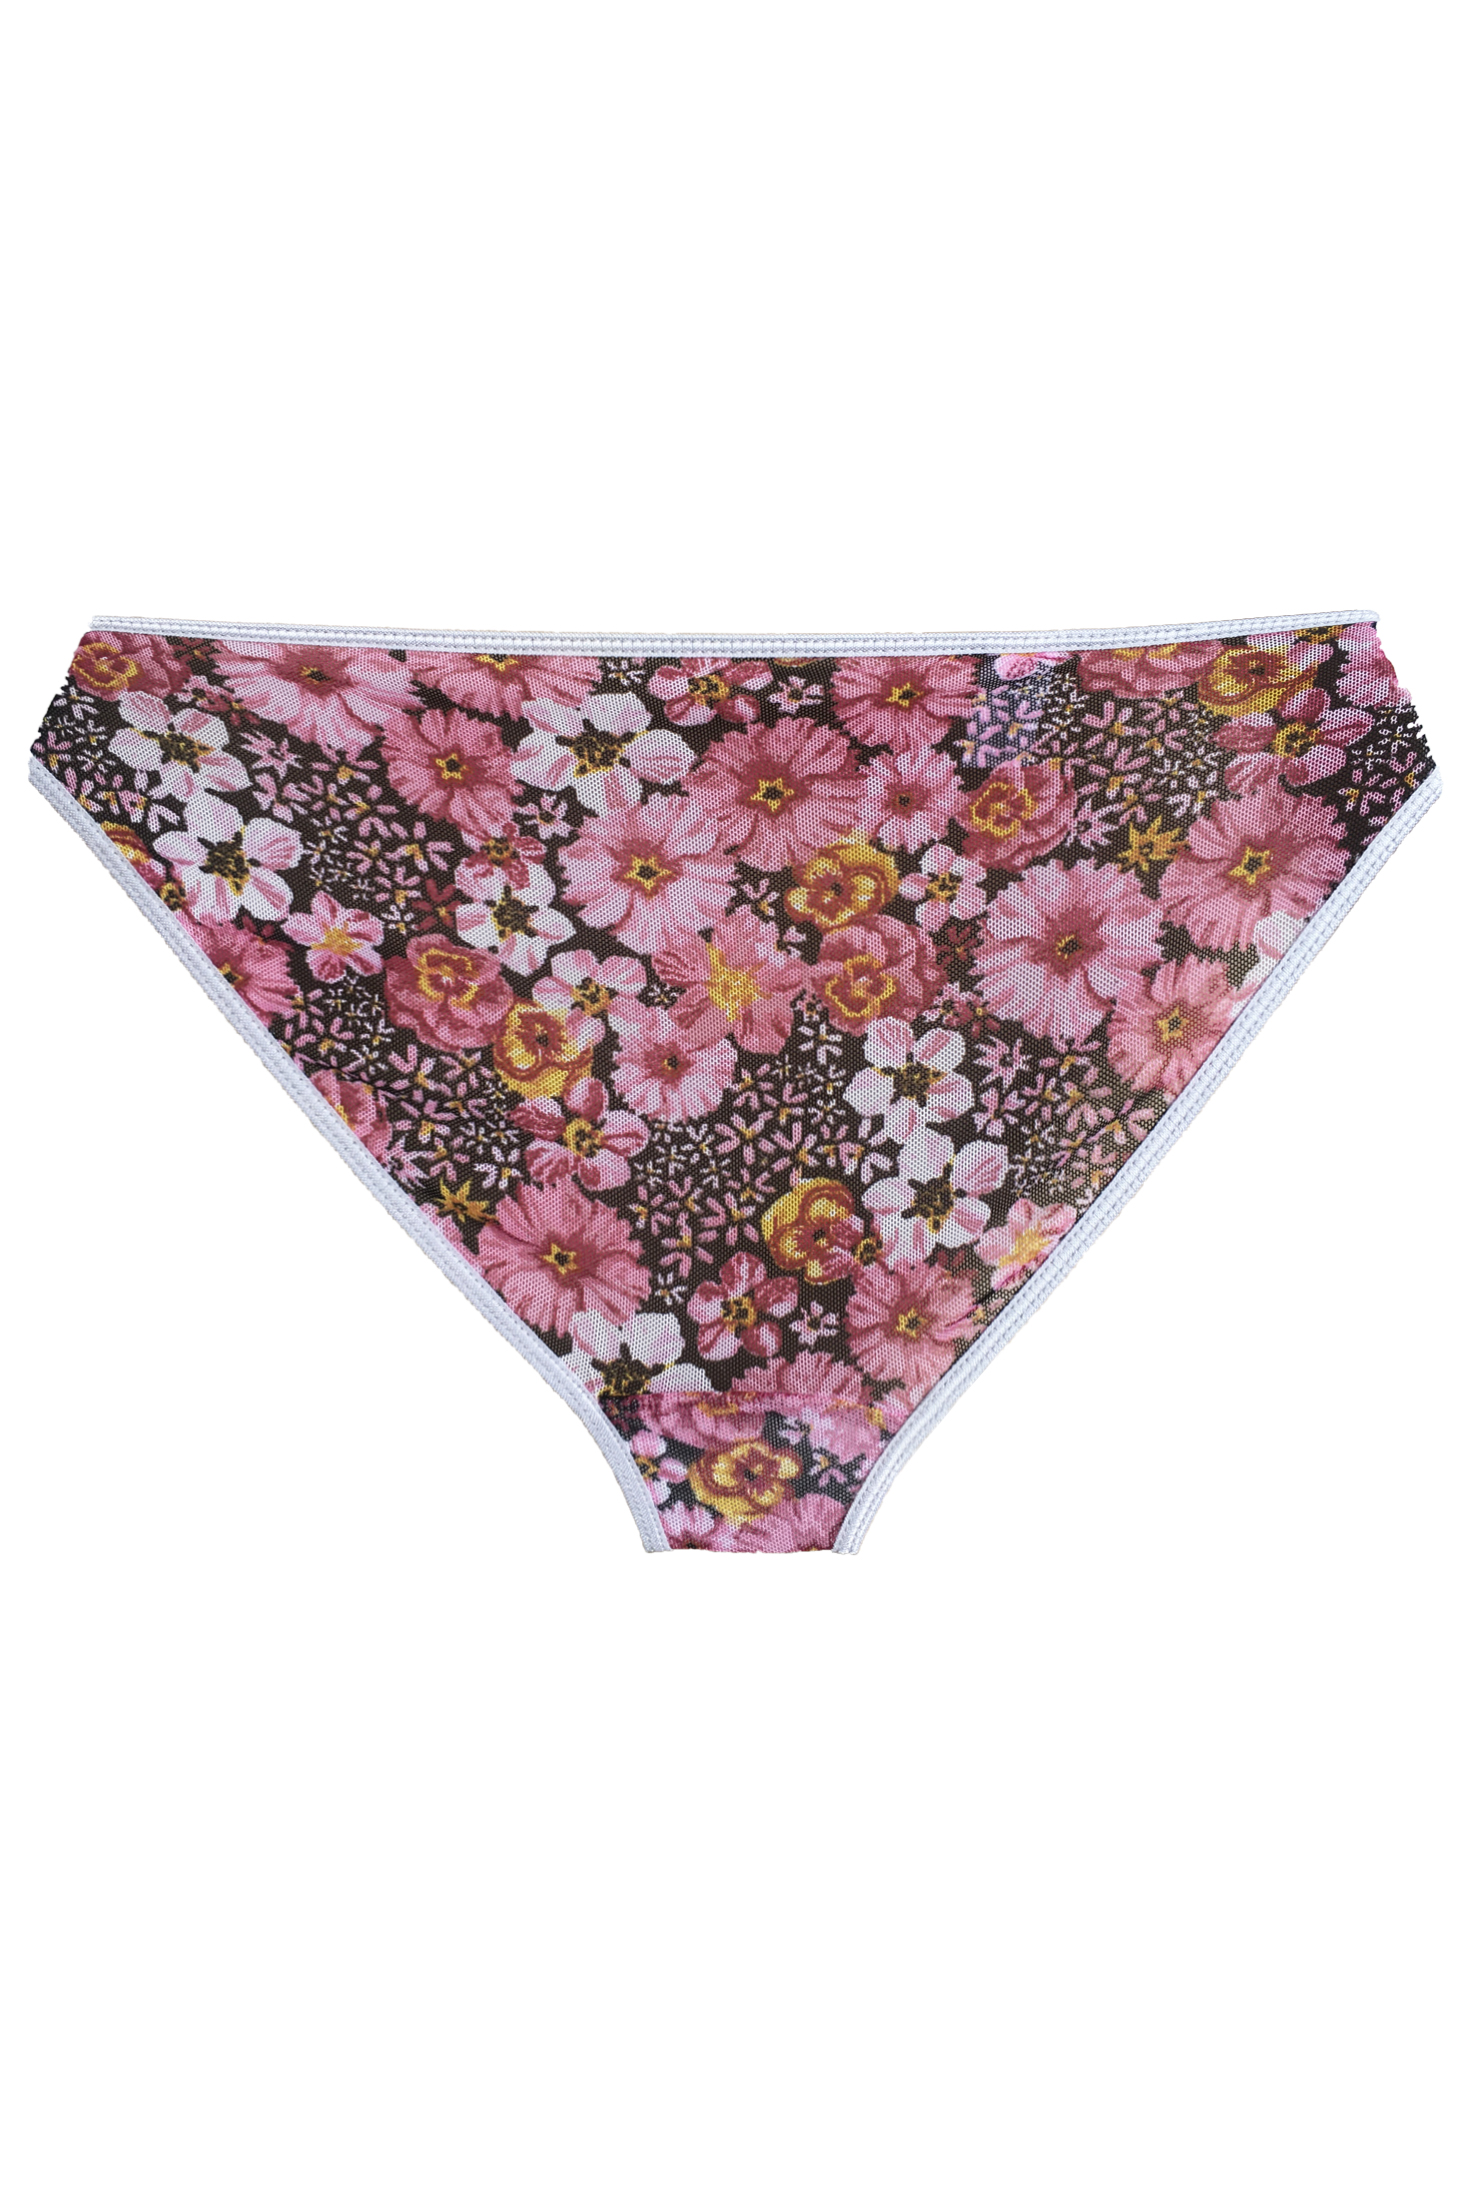 Lingerie Letters Spring Brief - Women's Underwear Online